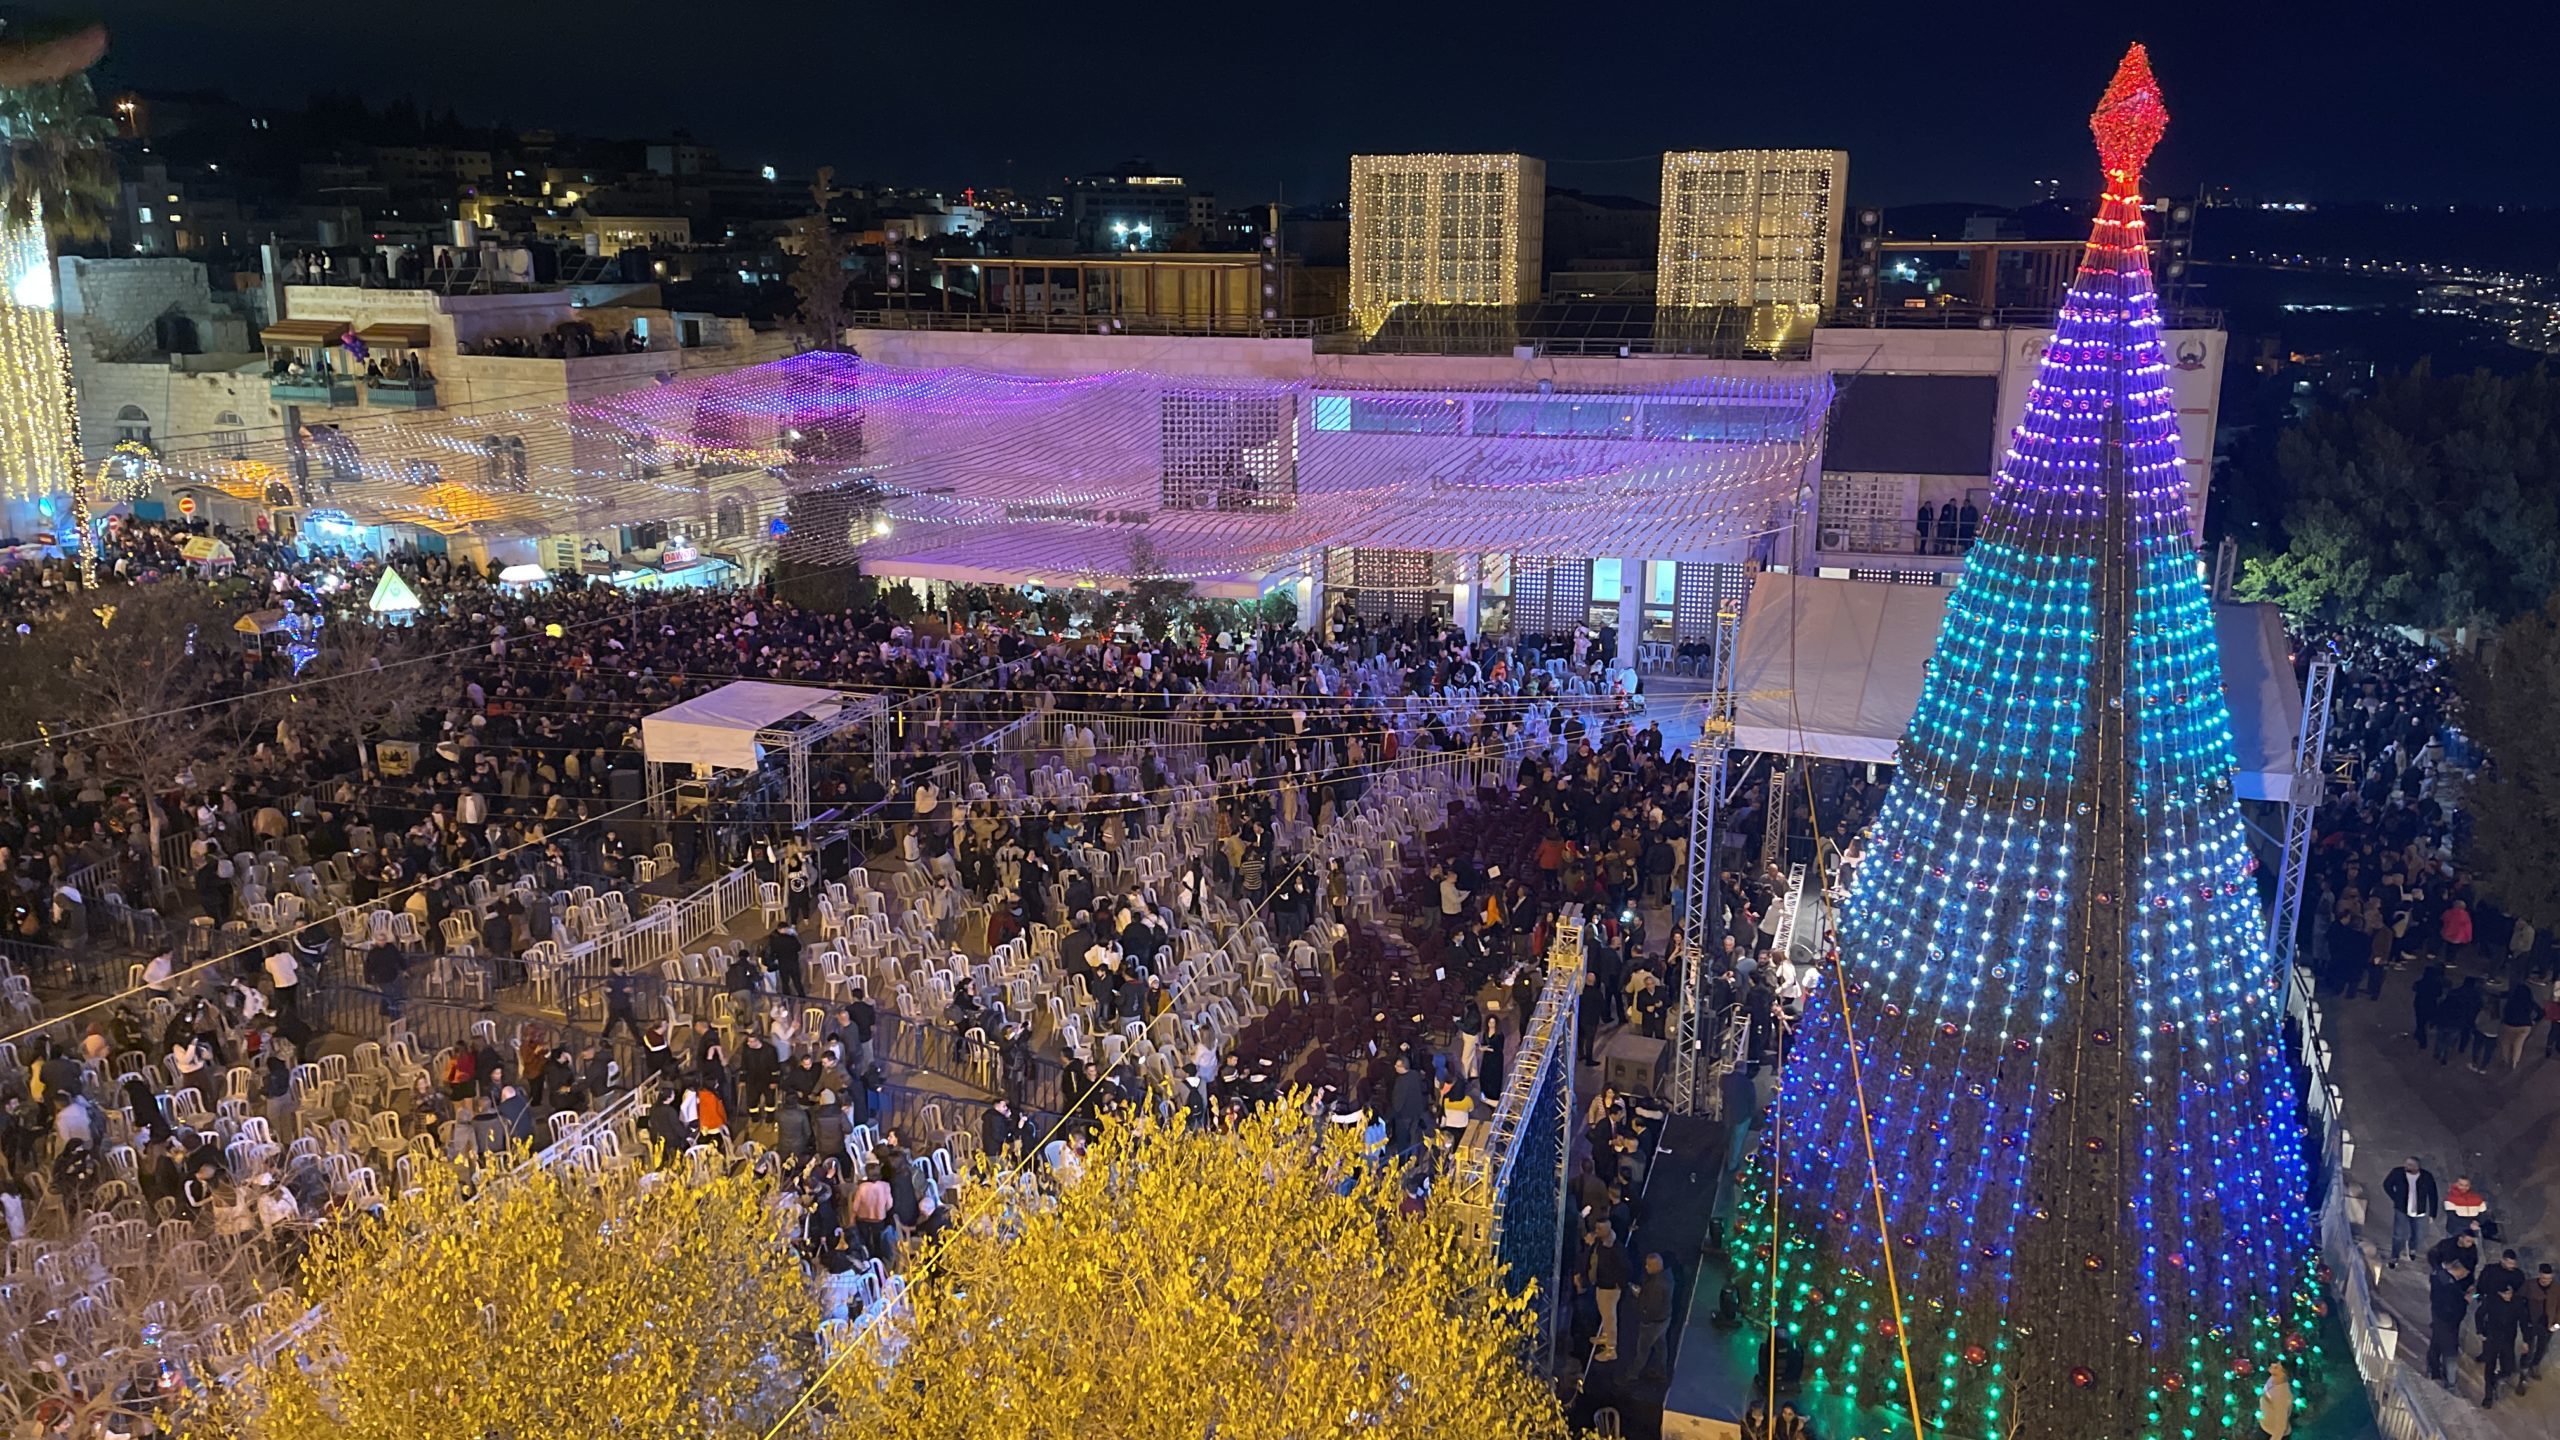 Christmas Festivities Go On in Bethlehem Despite Travel Restrictions (VIDEO REPORT)